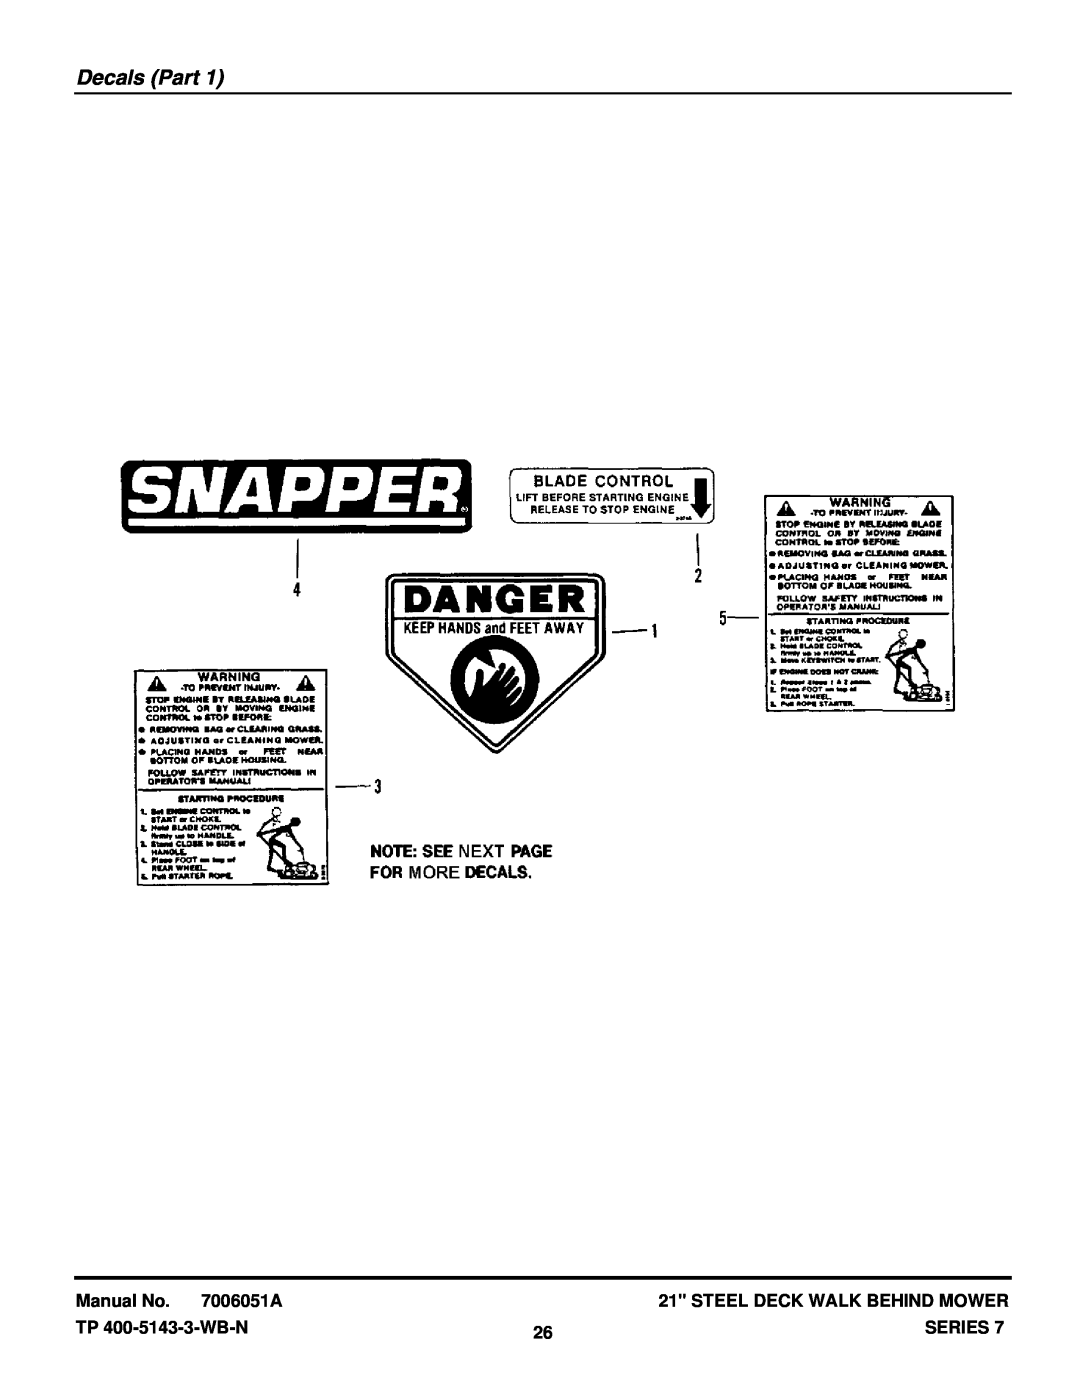 Snapper MP21357B, R21507B manual Decals Part, Manual No. 7006051A, Steel Deck Walk Behind Mower, TP 400-5143-3-WB-N, Series 